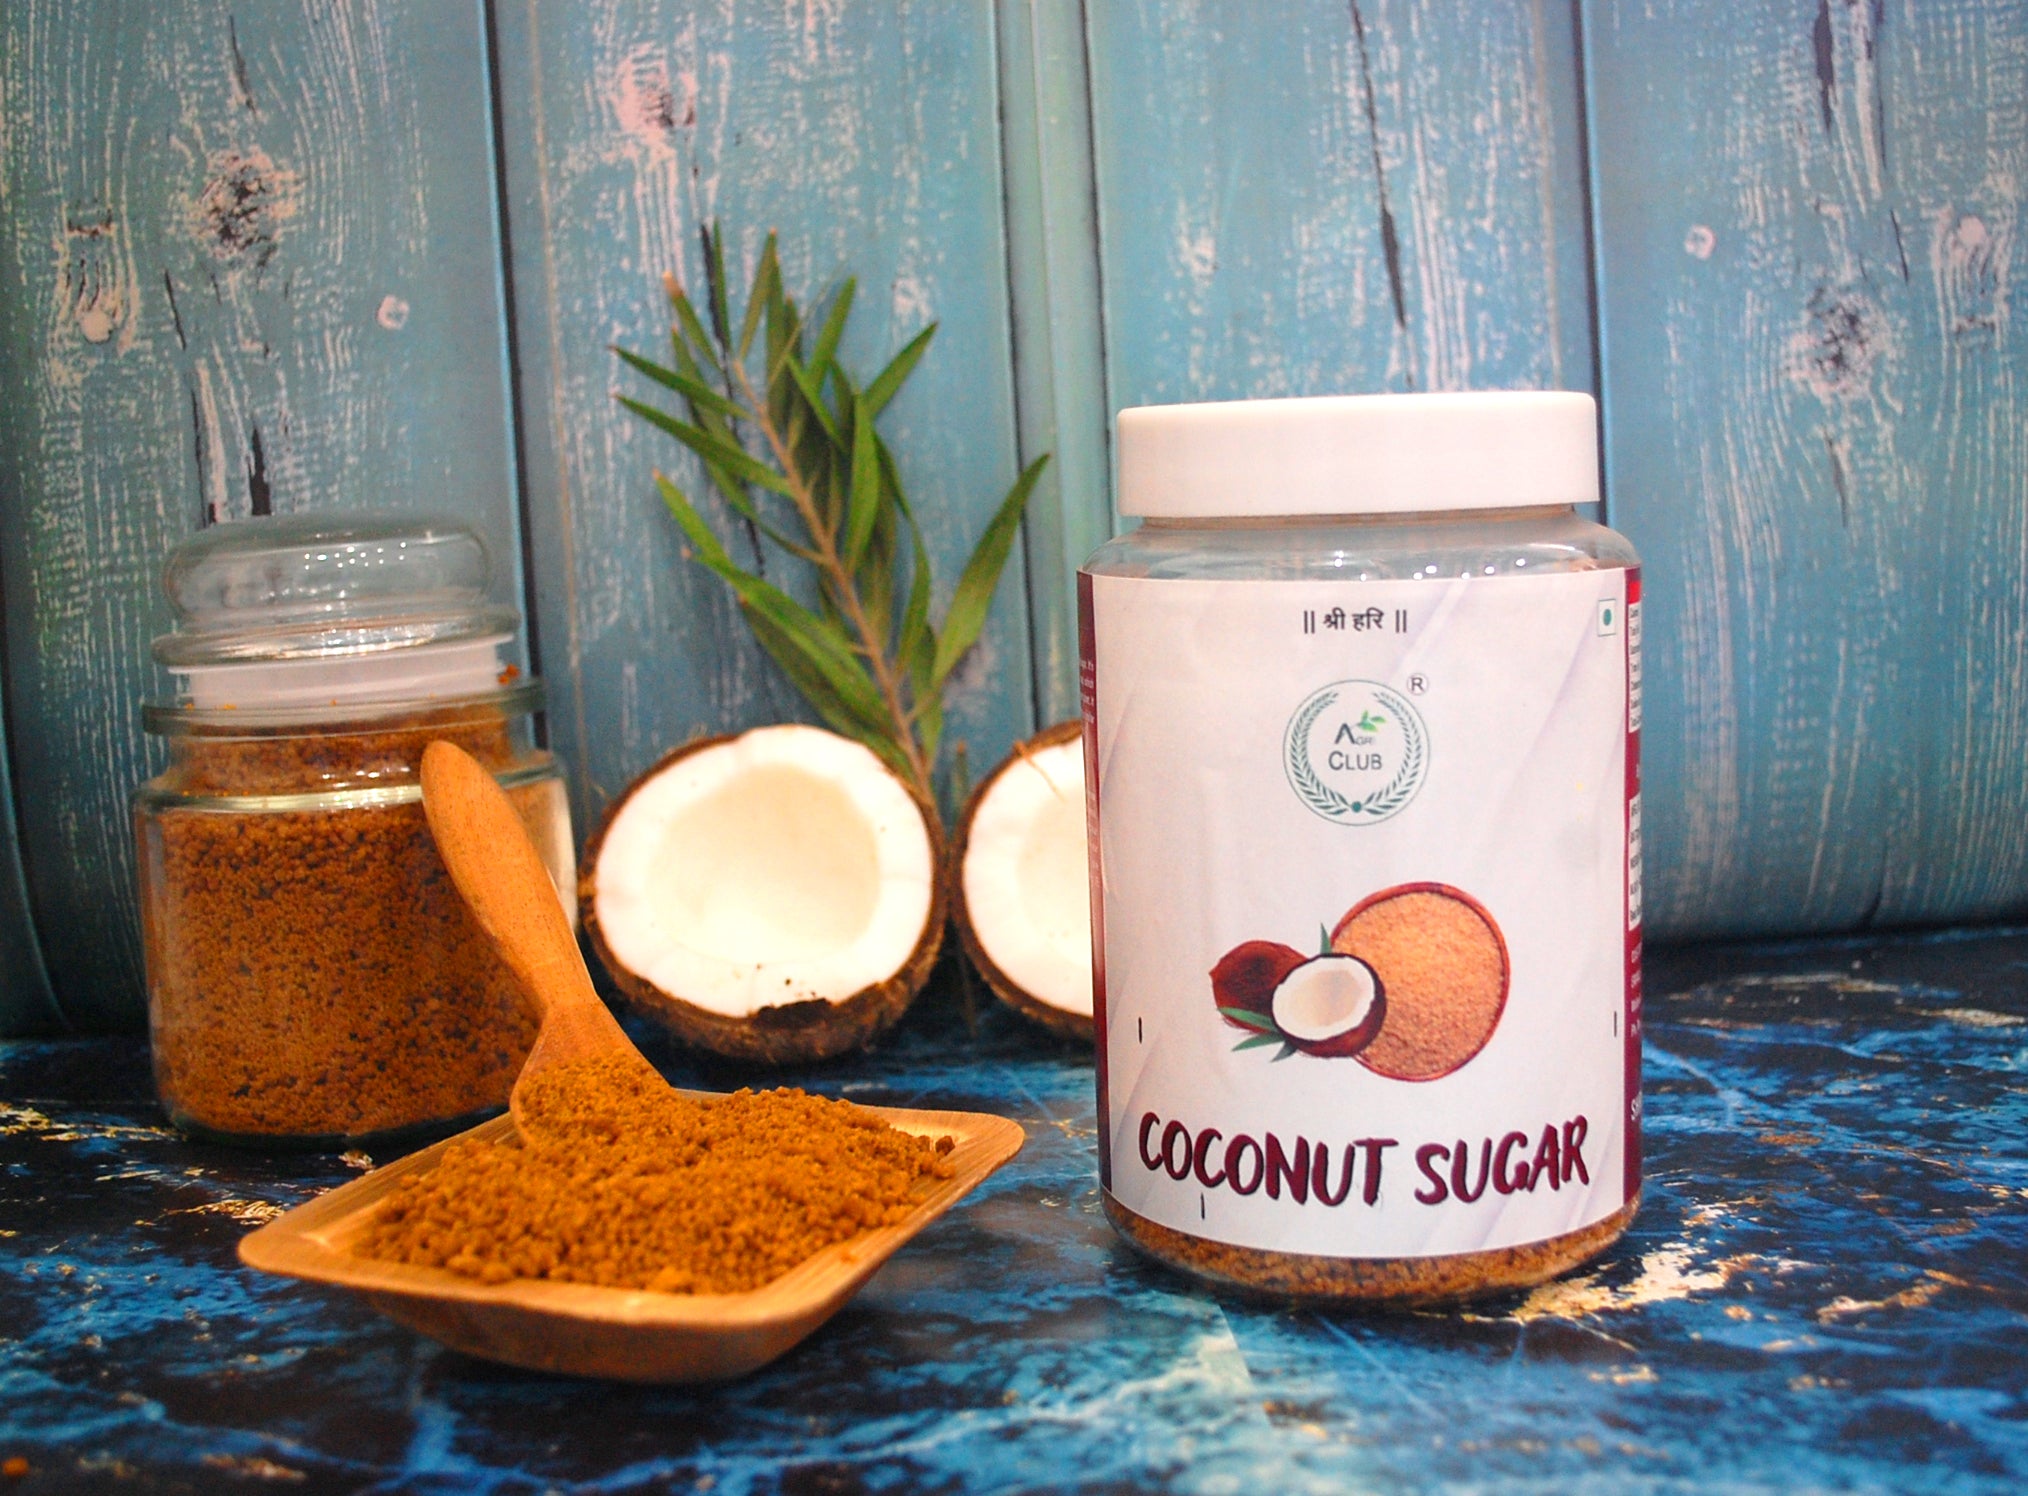 Coconut Sugar Premium Quality 500GM